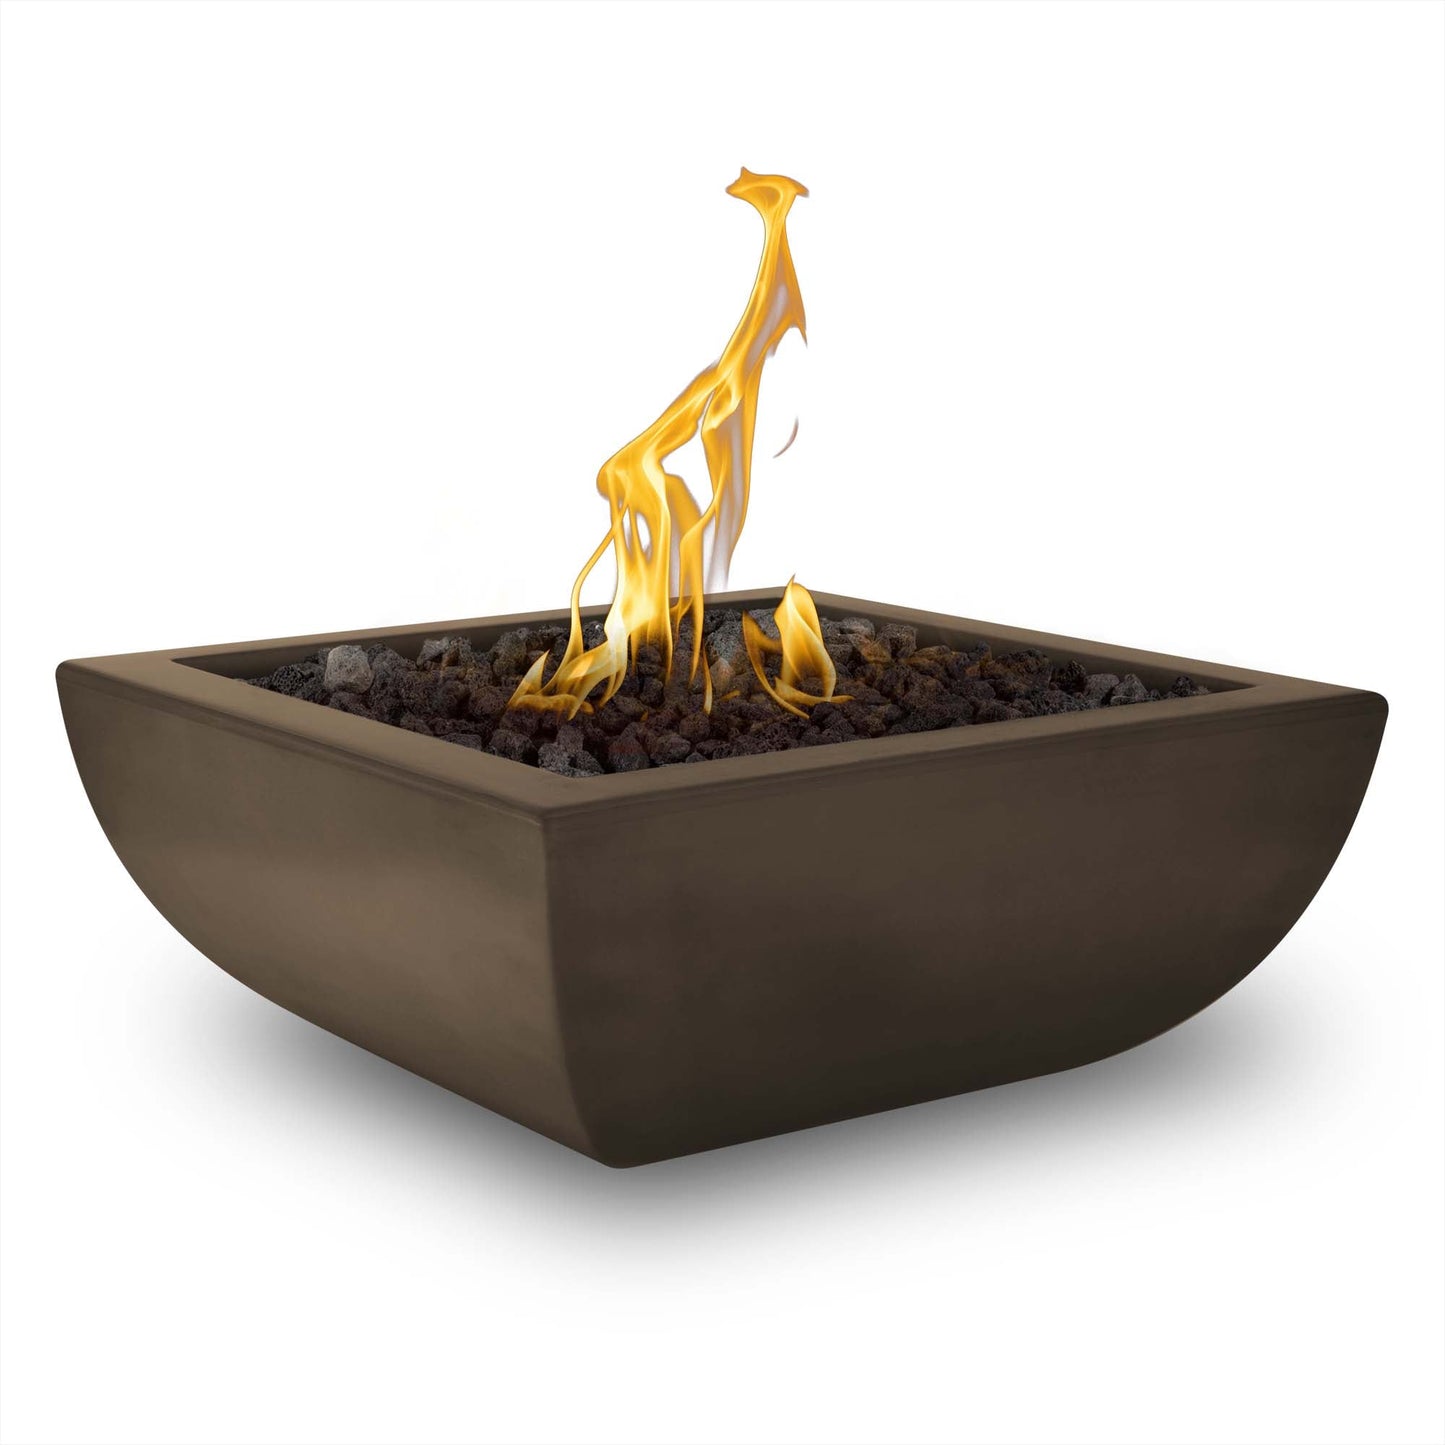 The Outdoor Plus Square Avalon 30" Metallic Bronze GFRC Concrete Liquid Propane Fire Bowl with Match Lit with Flame Sense Ignition